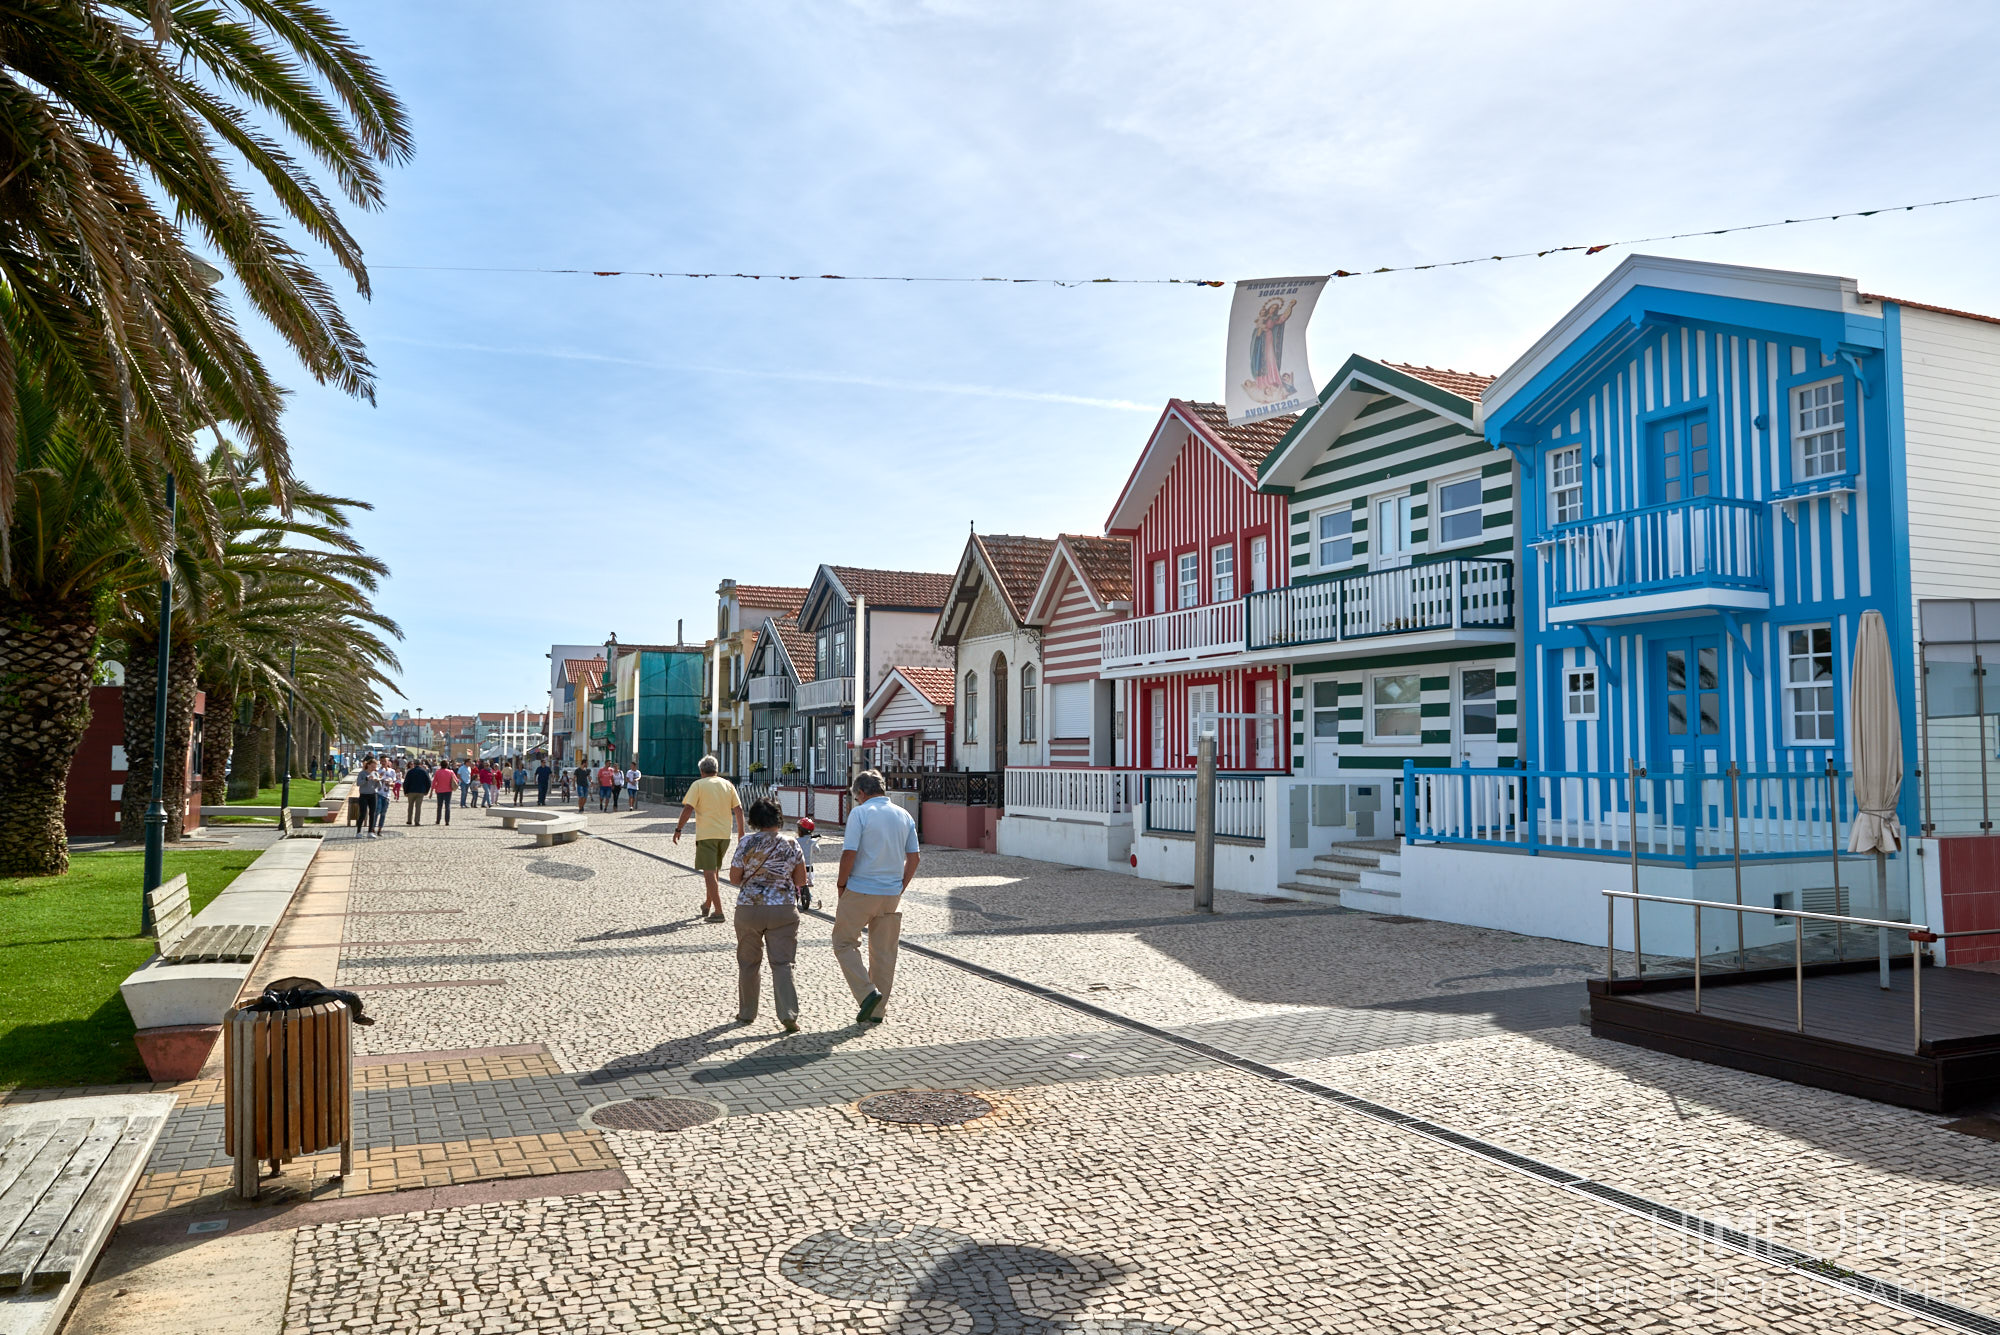 Die Stadt Aveiro in Portugal by AchimMeurer.com                     . 